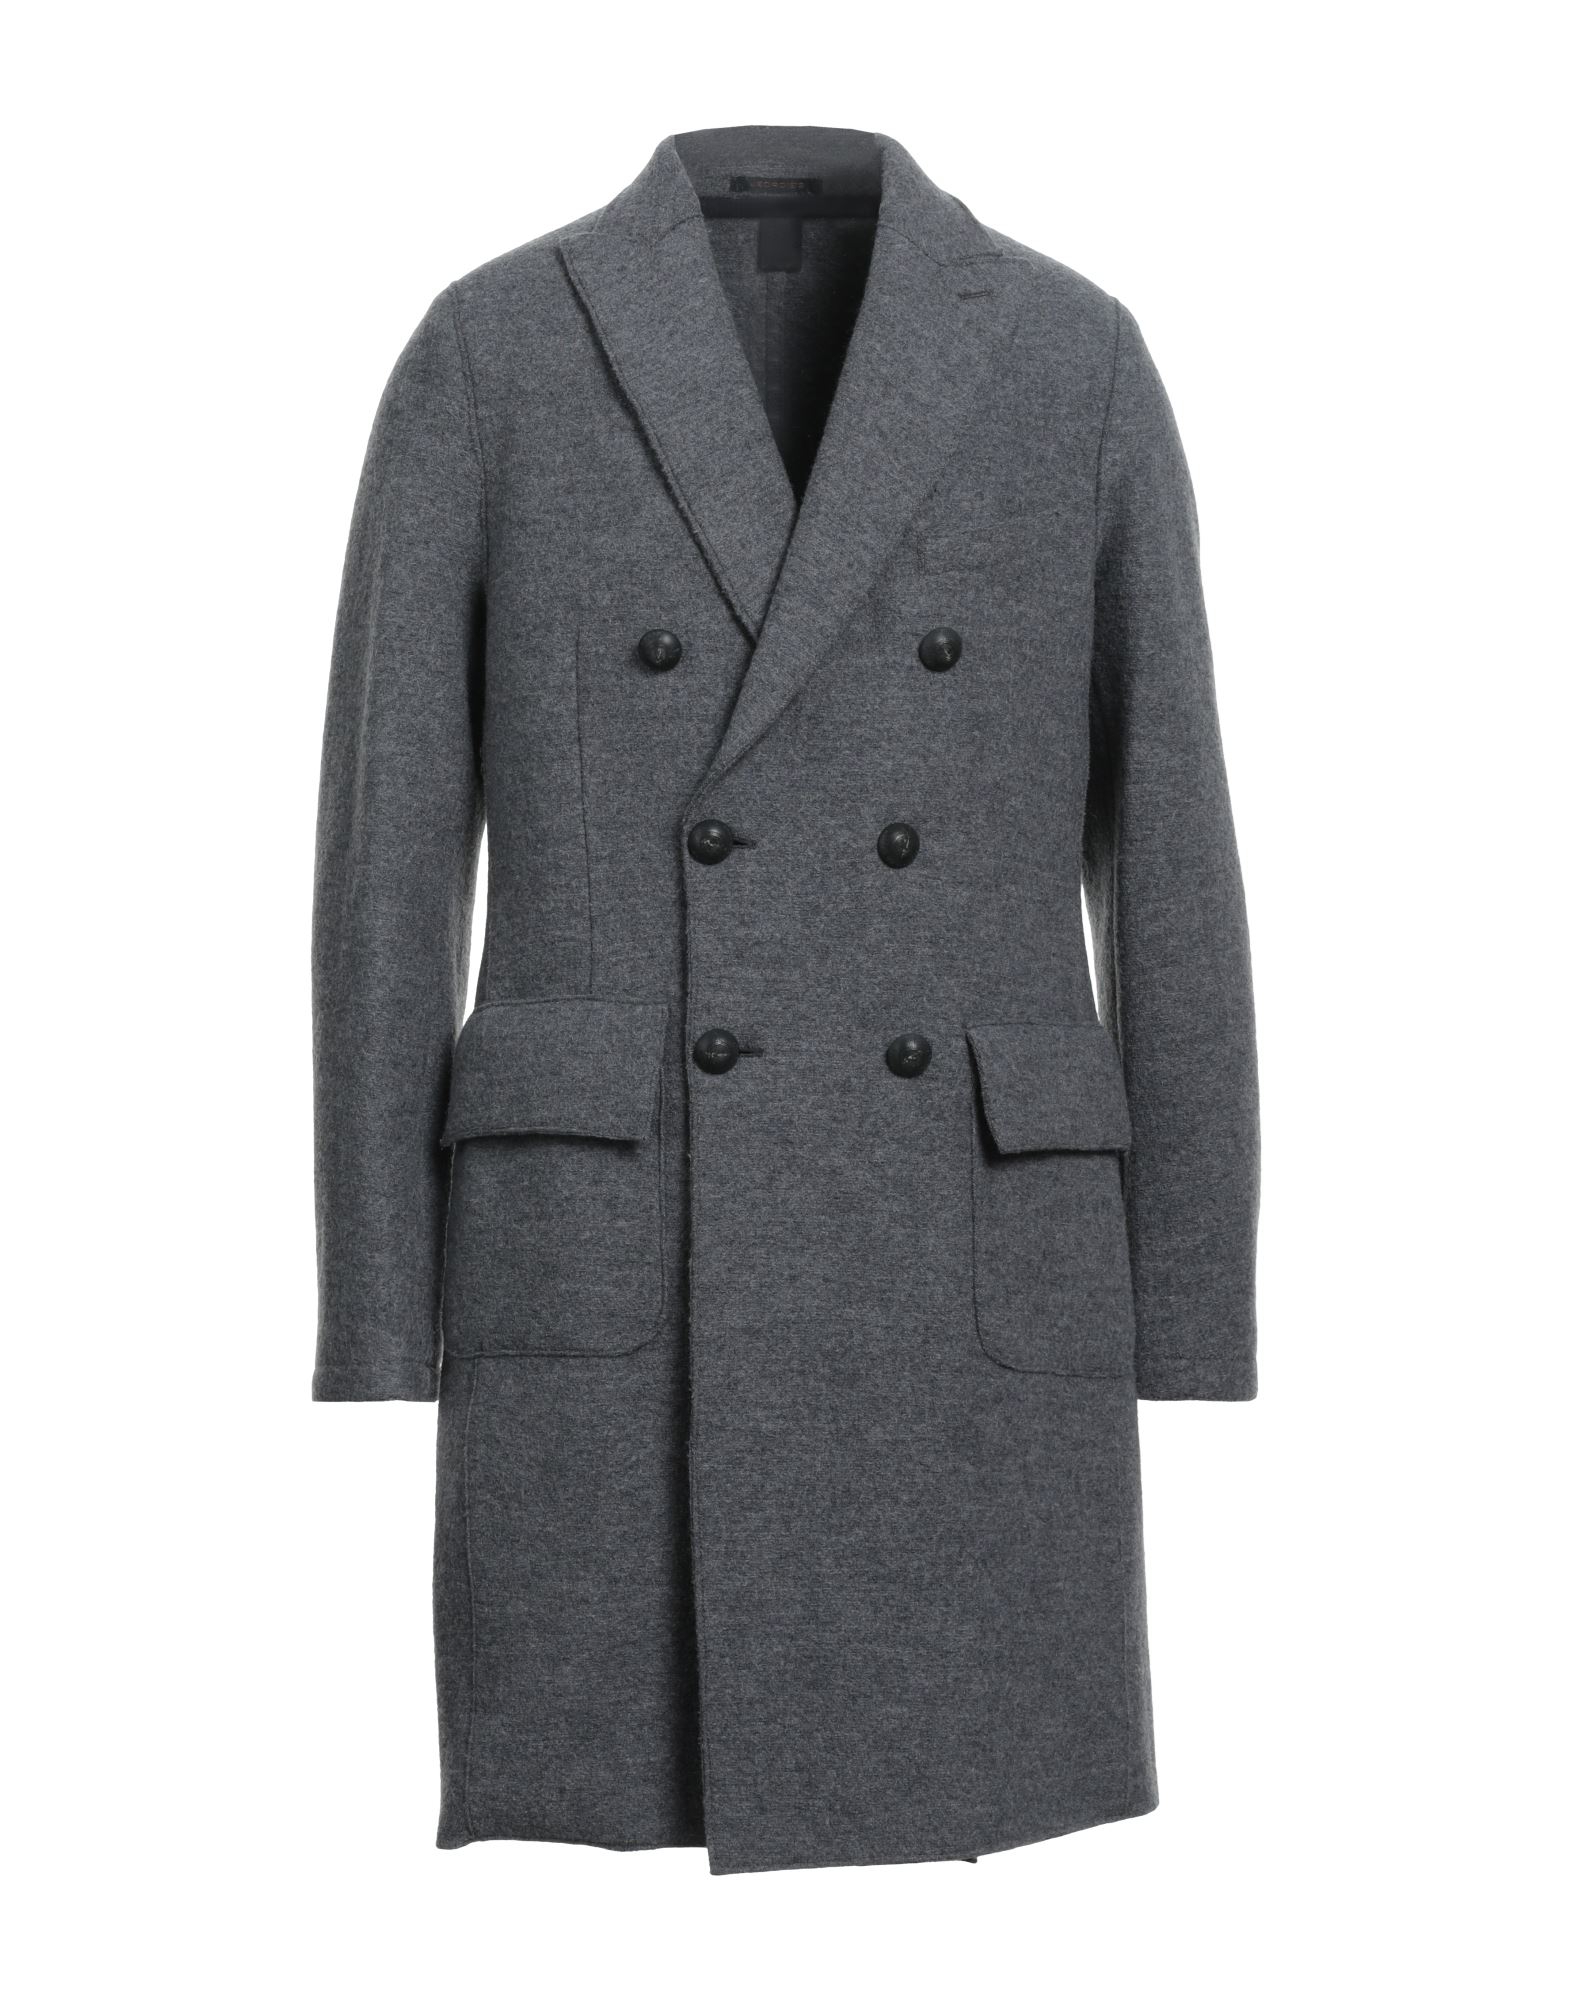 Jeordie's Coats In Grey